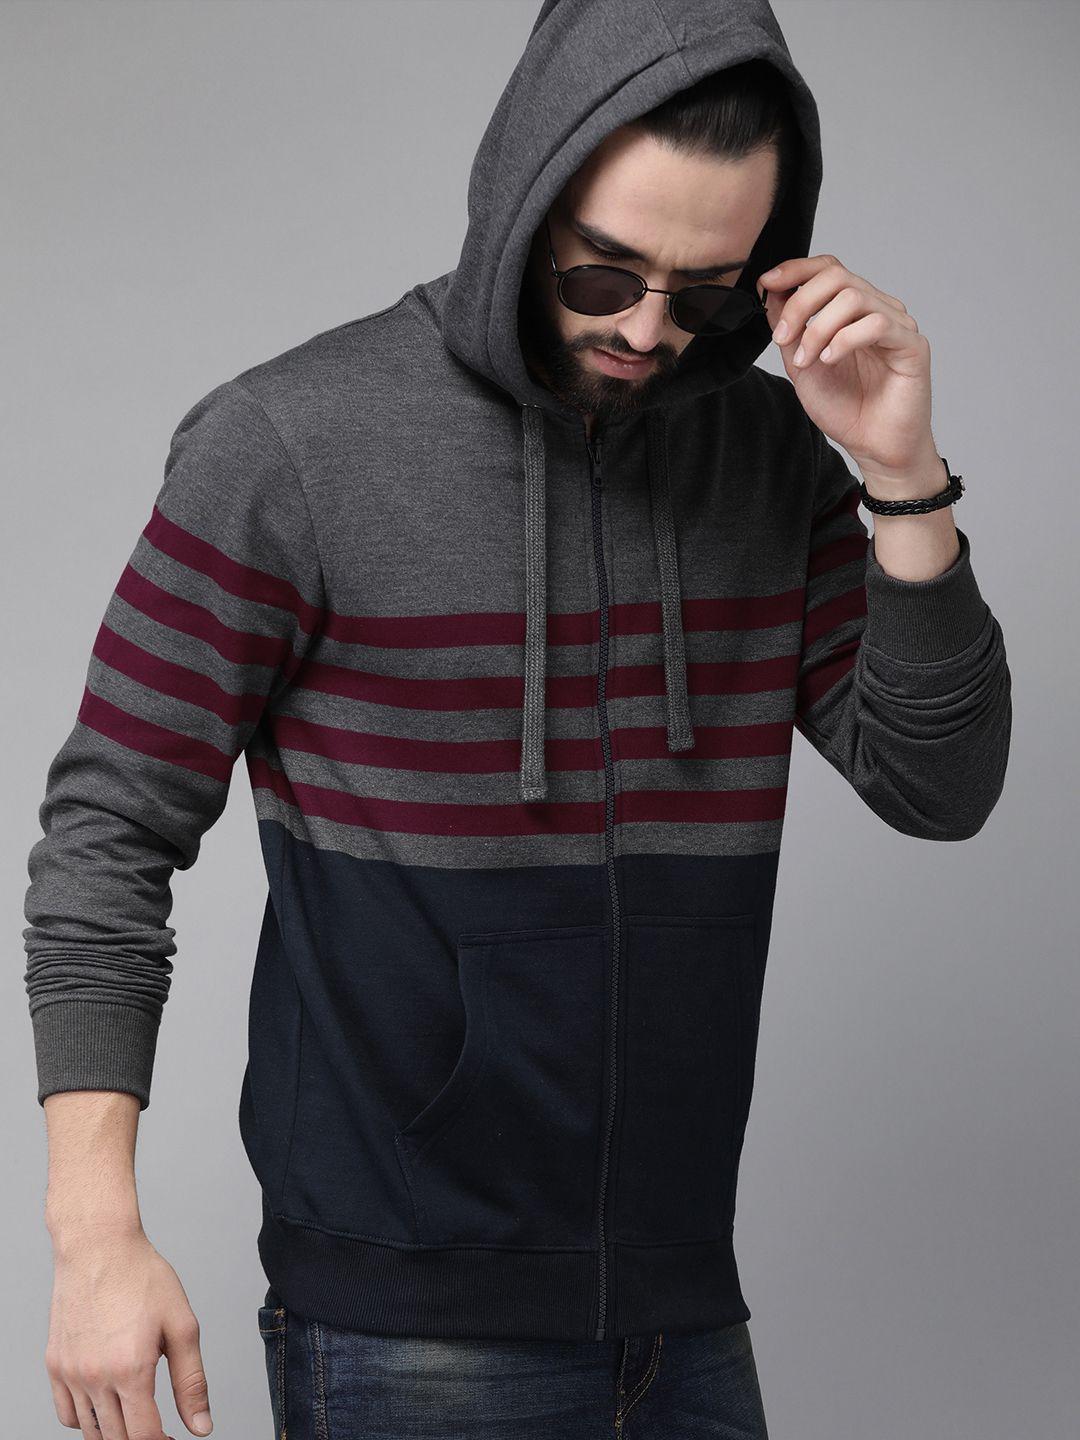 the roadster lifestyle co men navy blue & grey colourblocked hooded sweatshirt